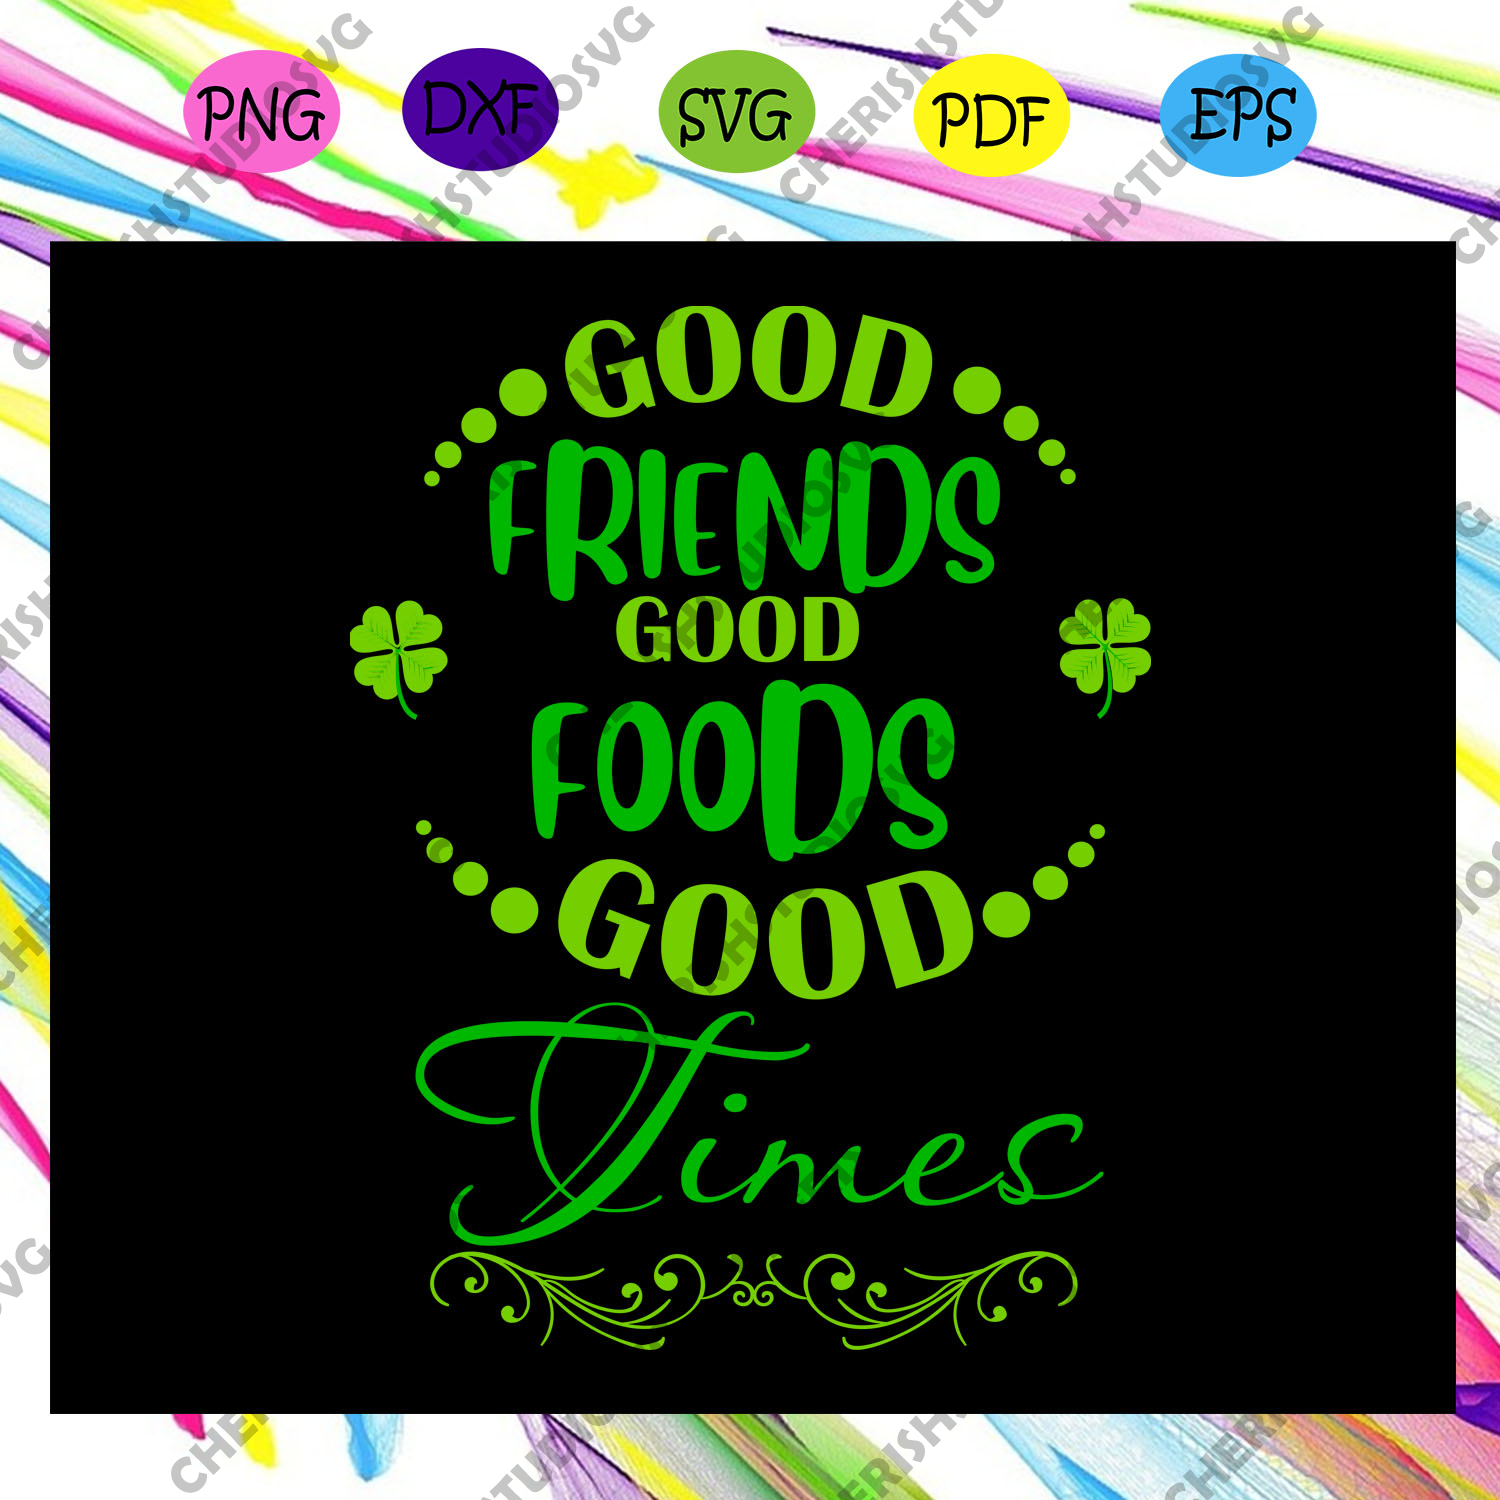 Download Good Friends Goof Foods Good Times Gift For Friend Best Friend Gift Cherishsvgstudio